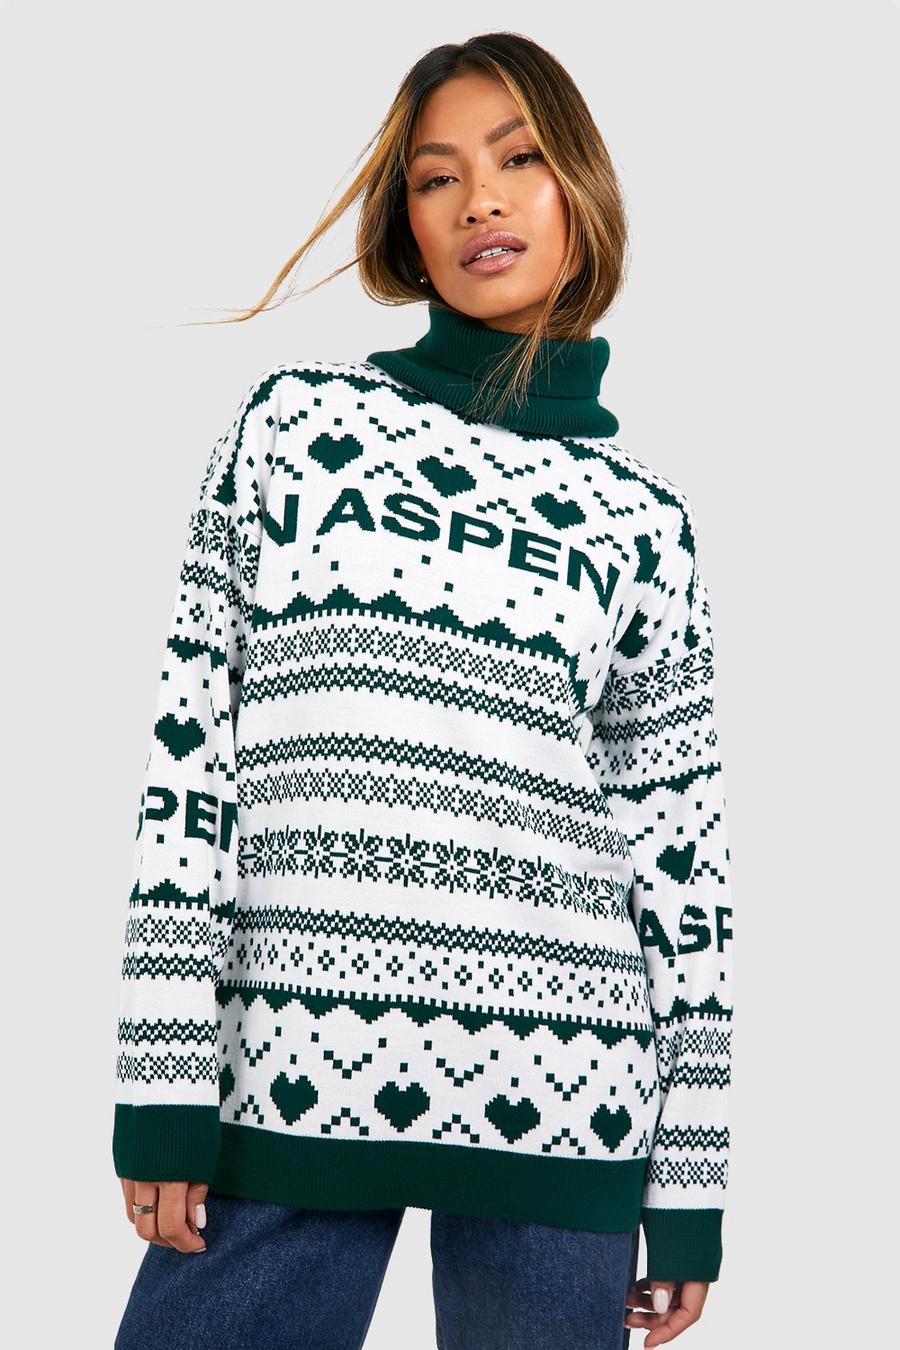 Bottle Turtleneck Aspen Slogan Fairisle Christmas Sweater